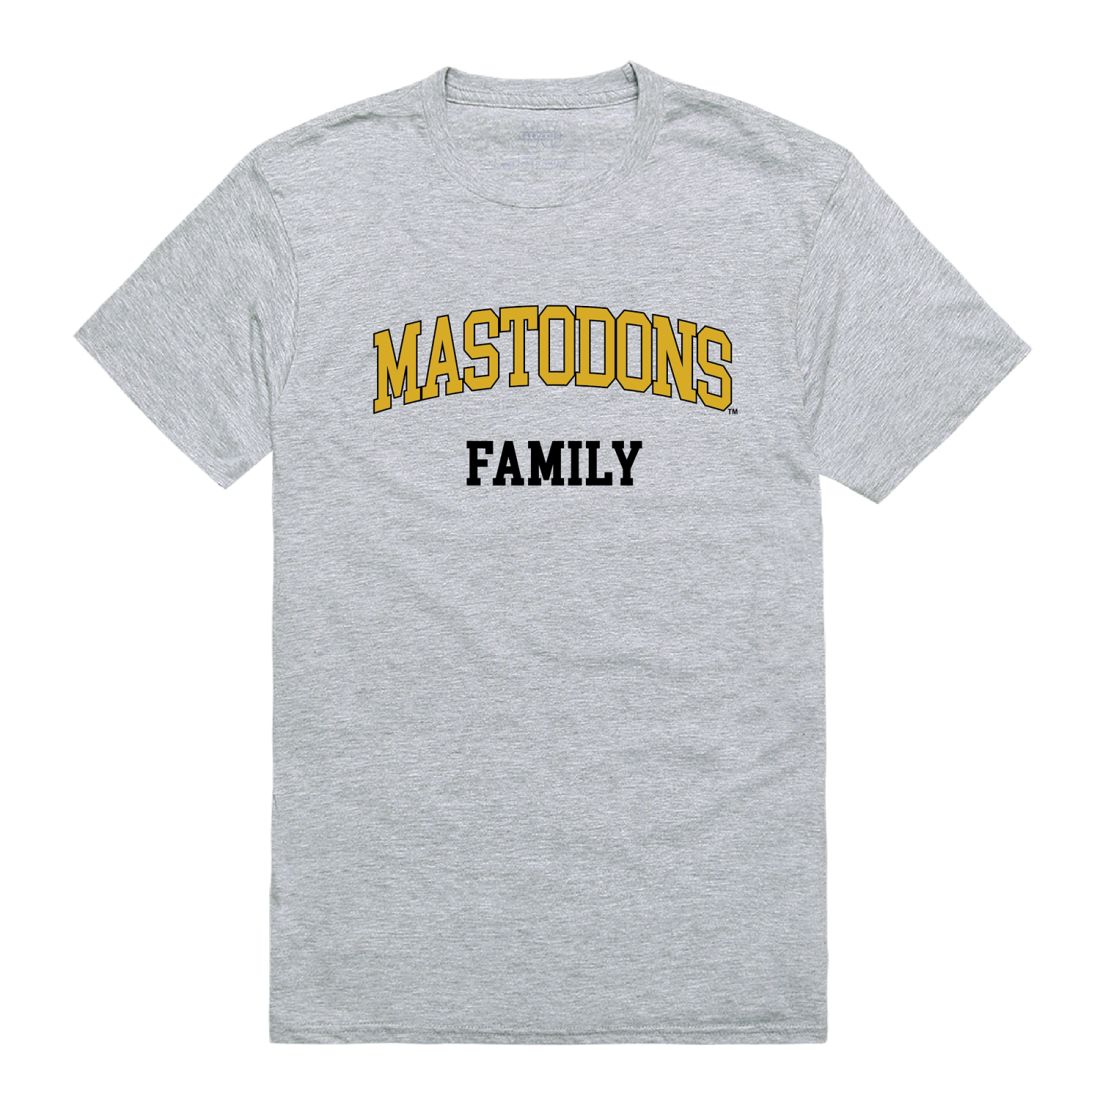 Purdue University Fort Wayne Mastodons Family T-Shirt